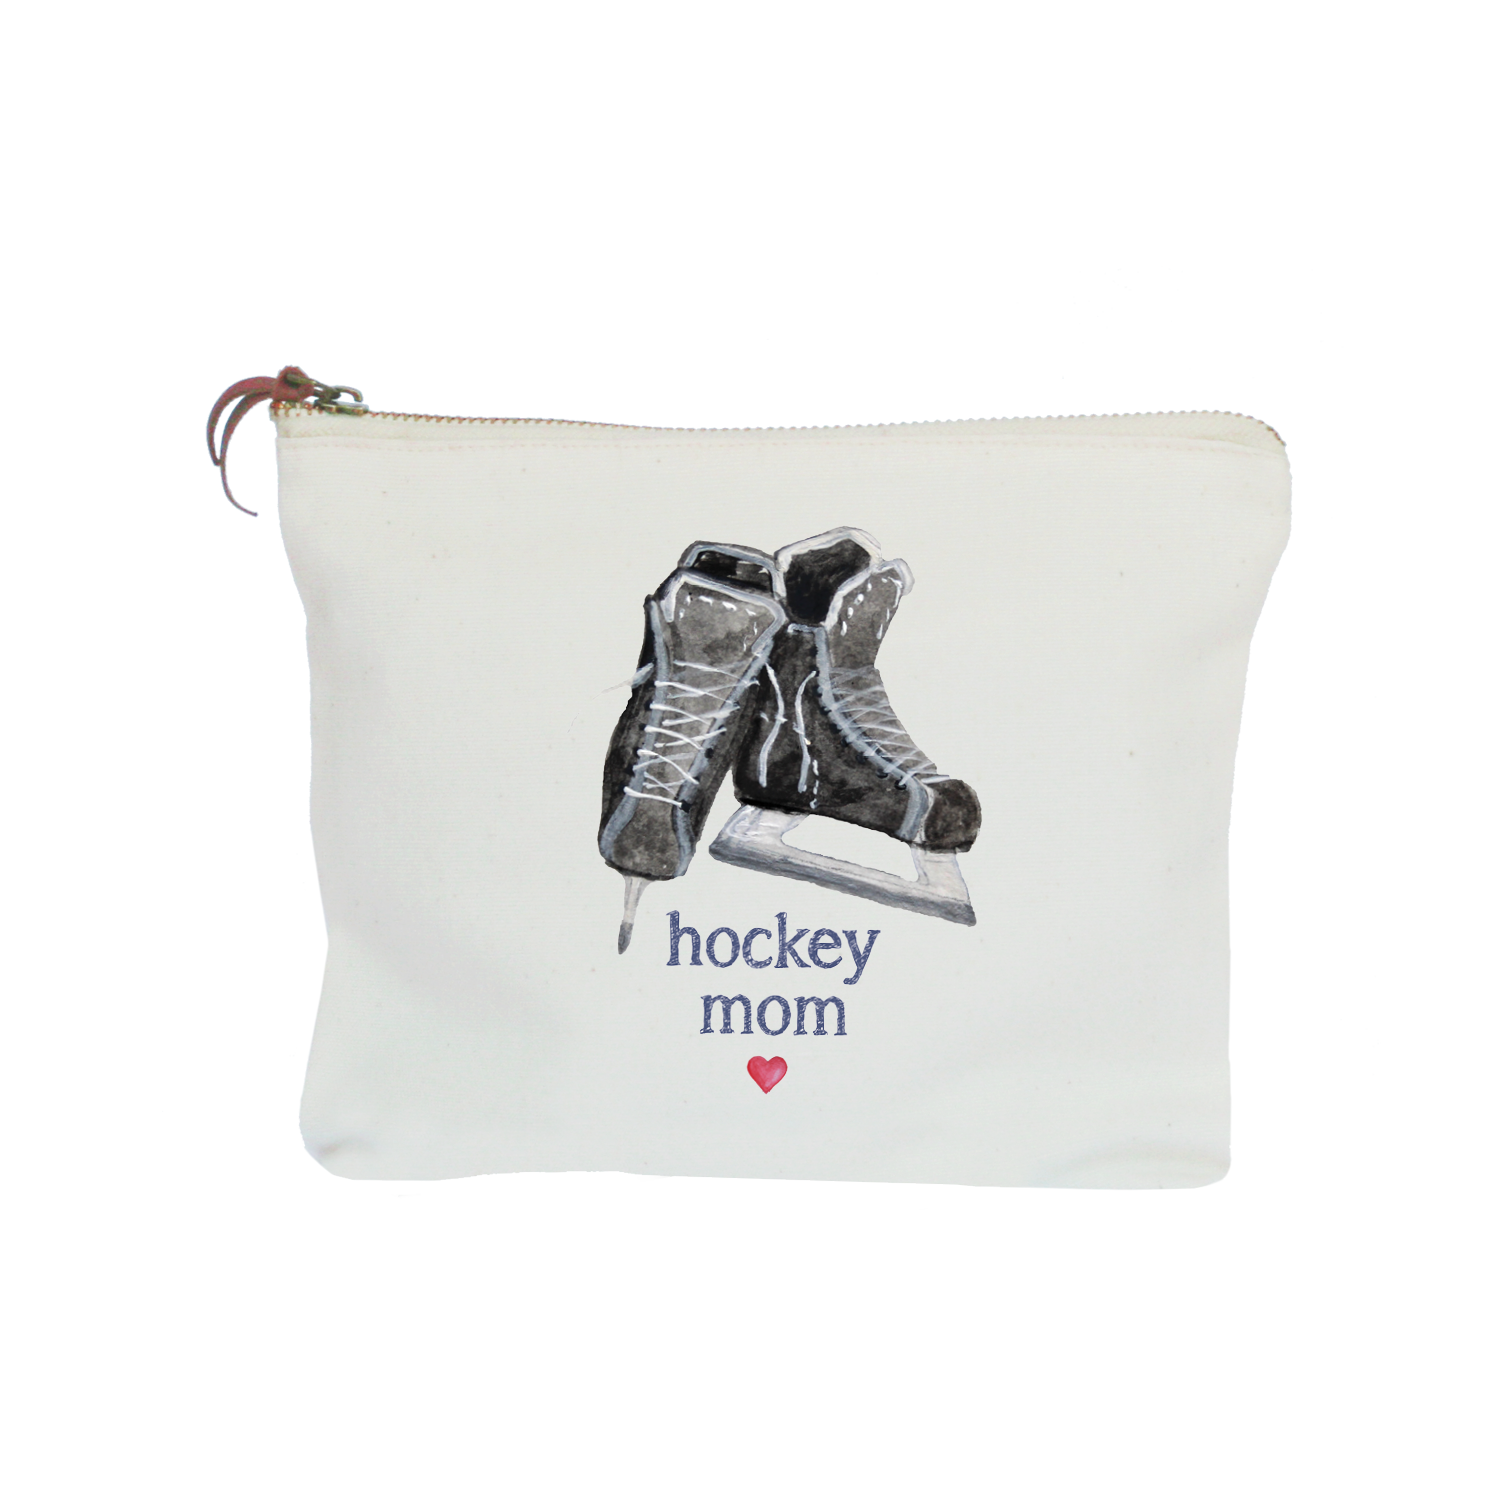 hockey mom zipper pouch